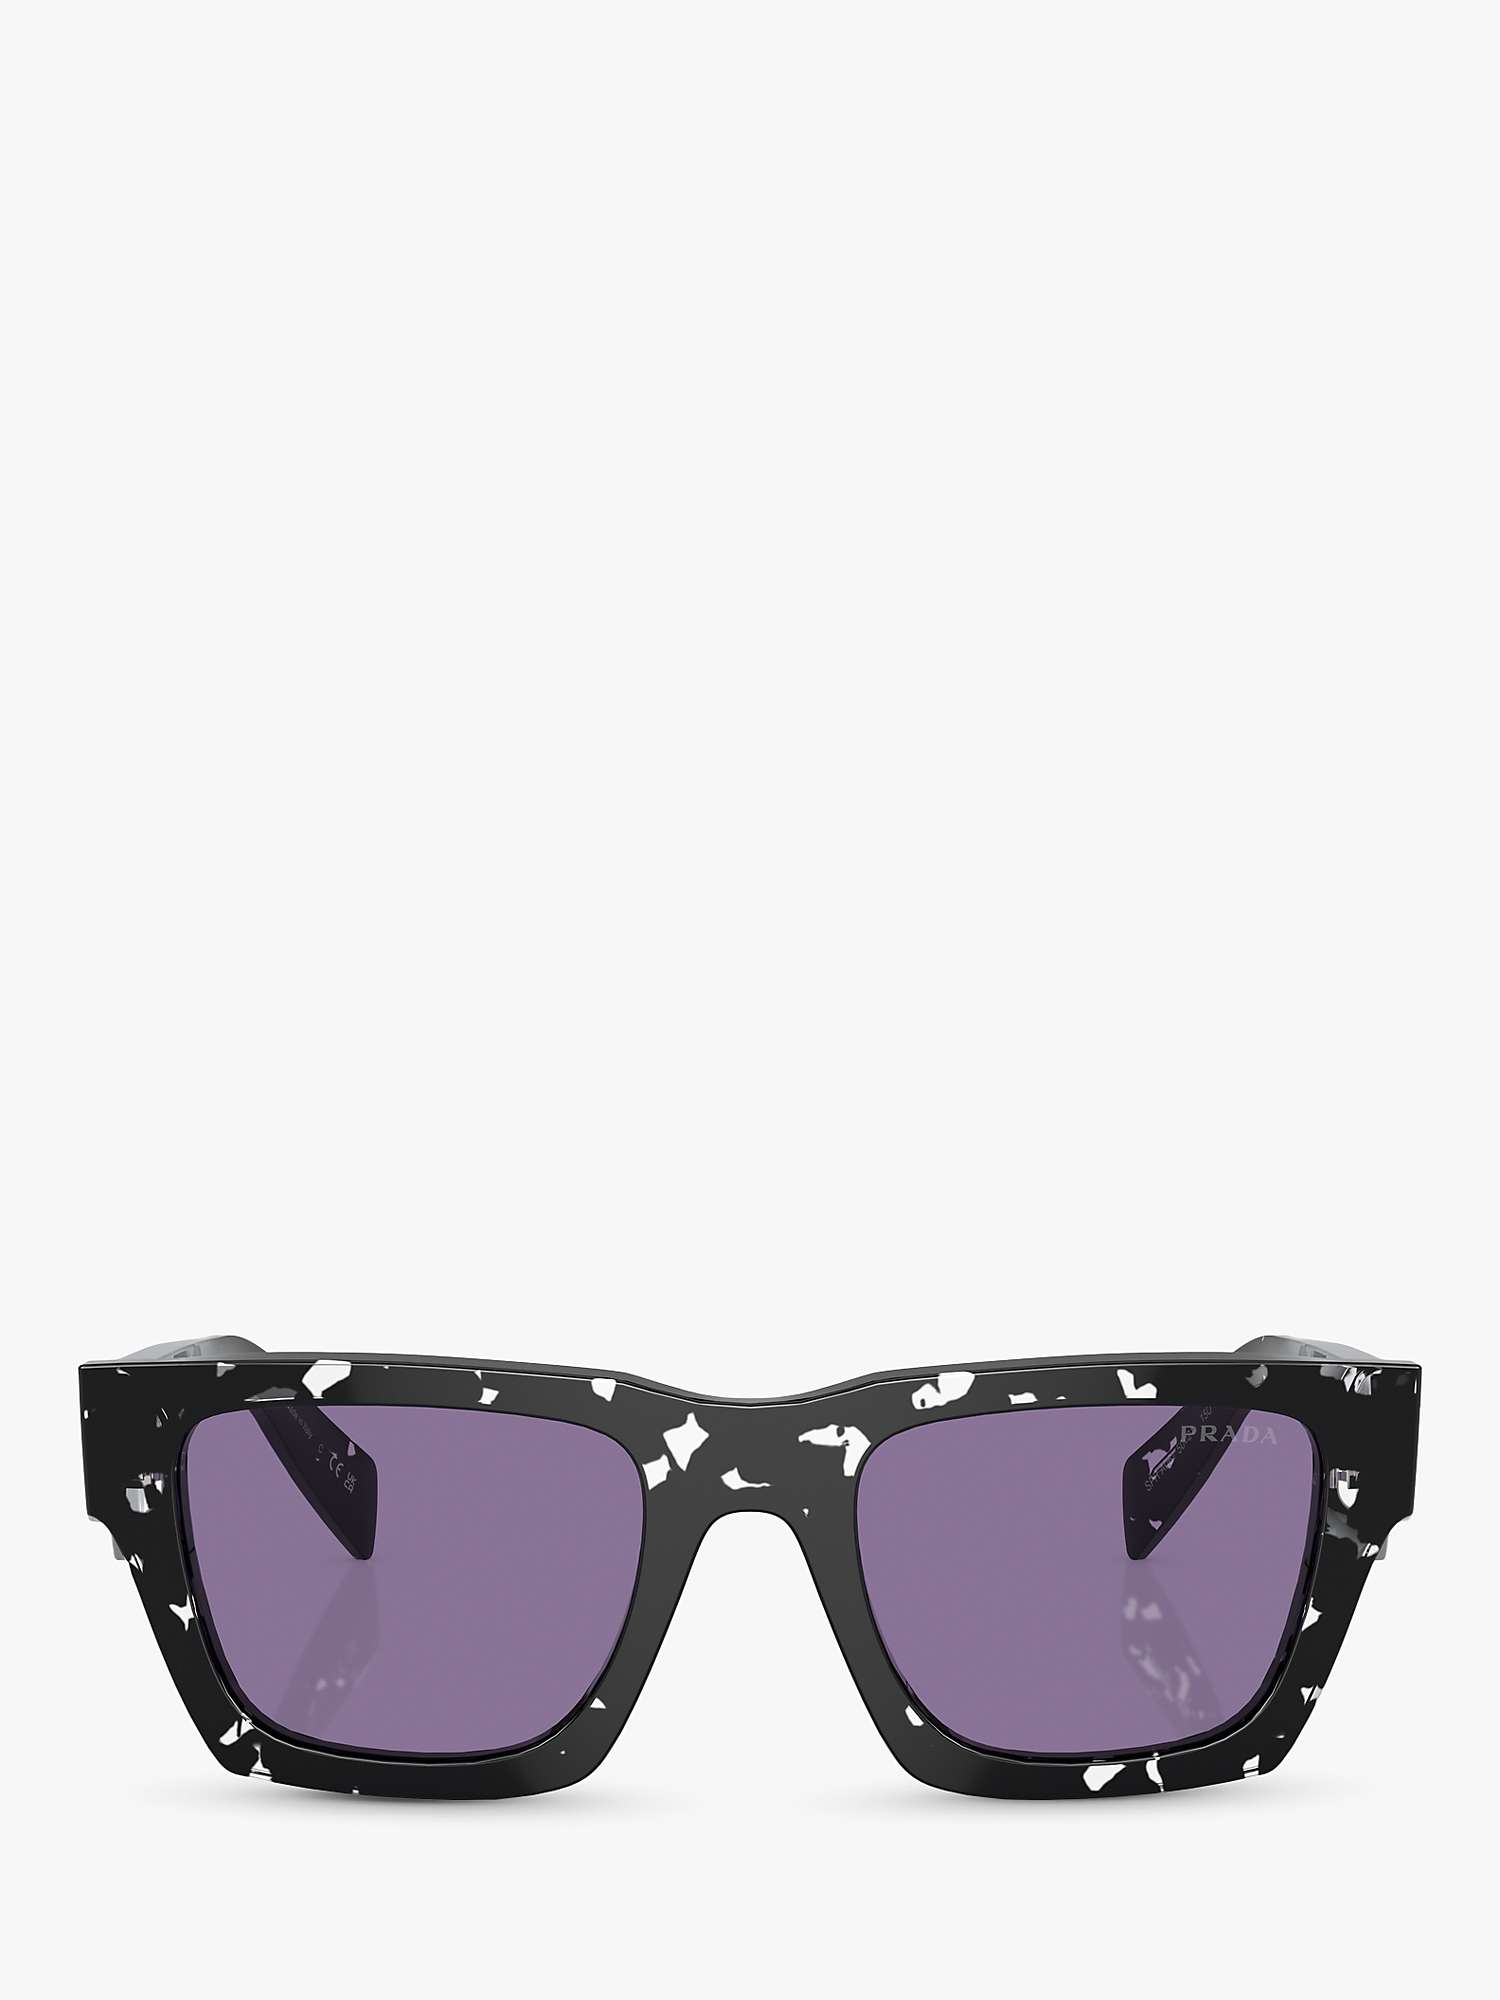 Buy Prada PR A06S Men's Rectangular Sunglasses, Black Tortoise/Violet Online at johnlewis.com